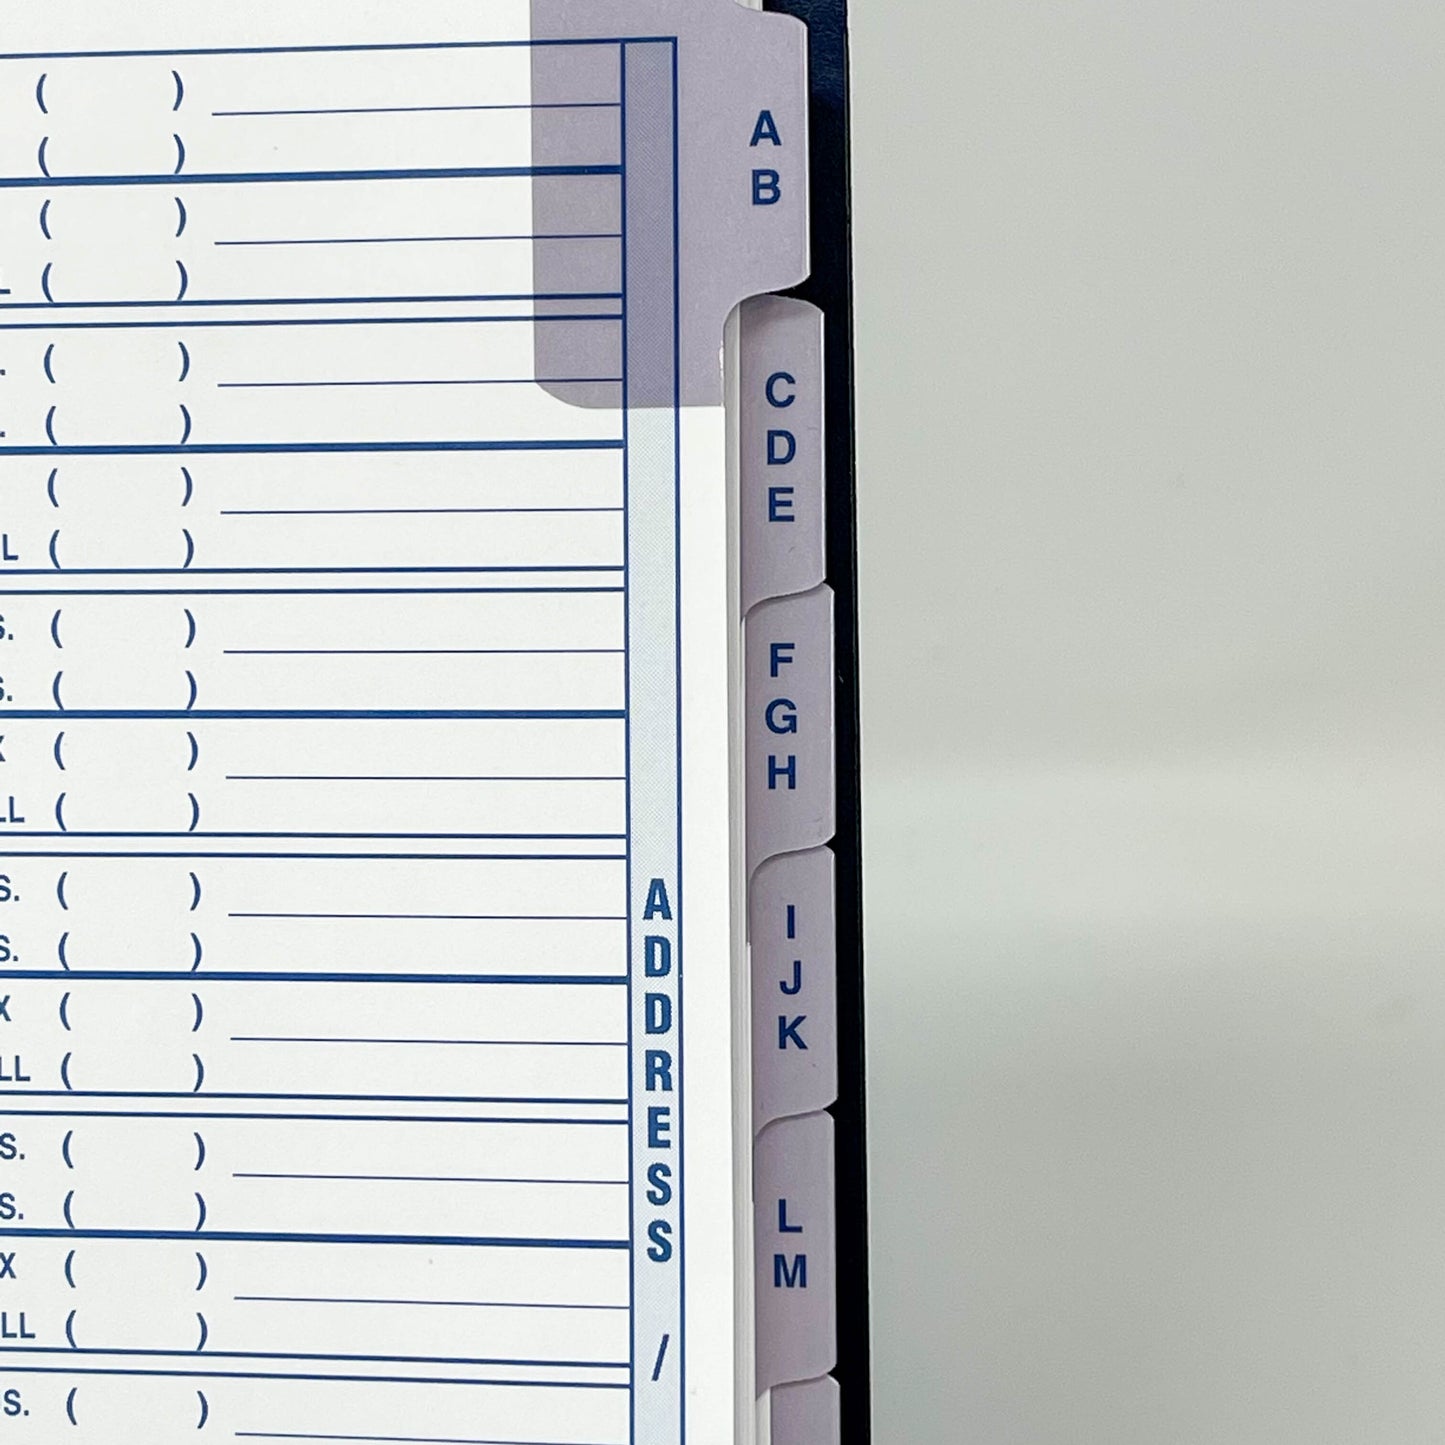 BOSS Address and Phone Number small spiral binder book Blue 5 x 8 (APSBU)